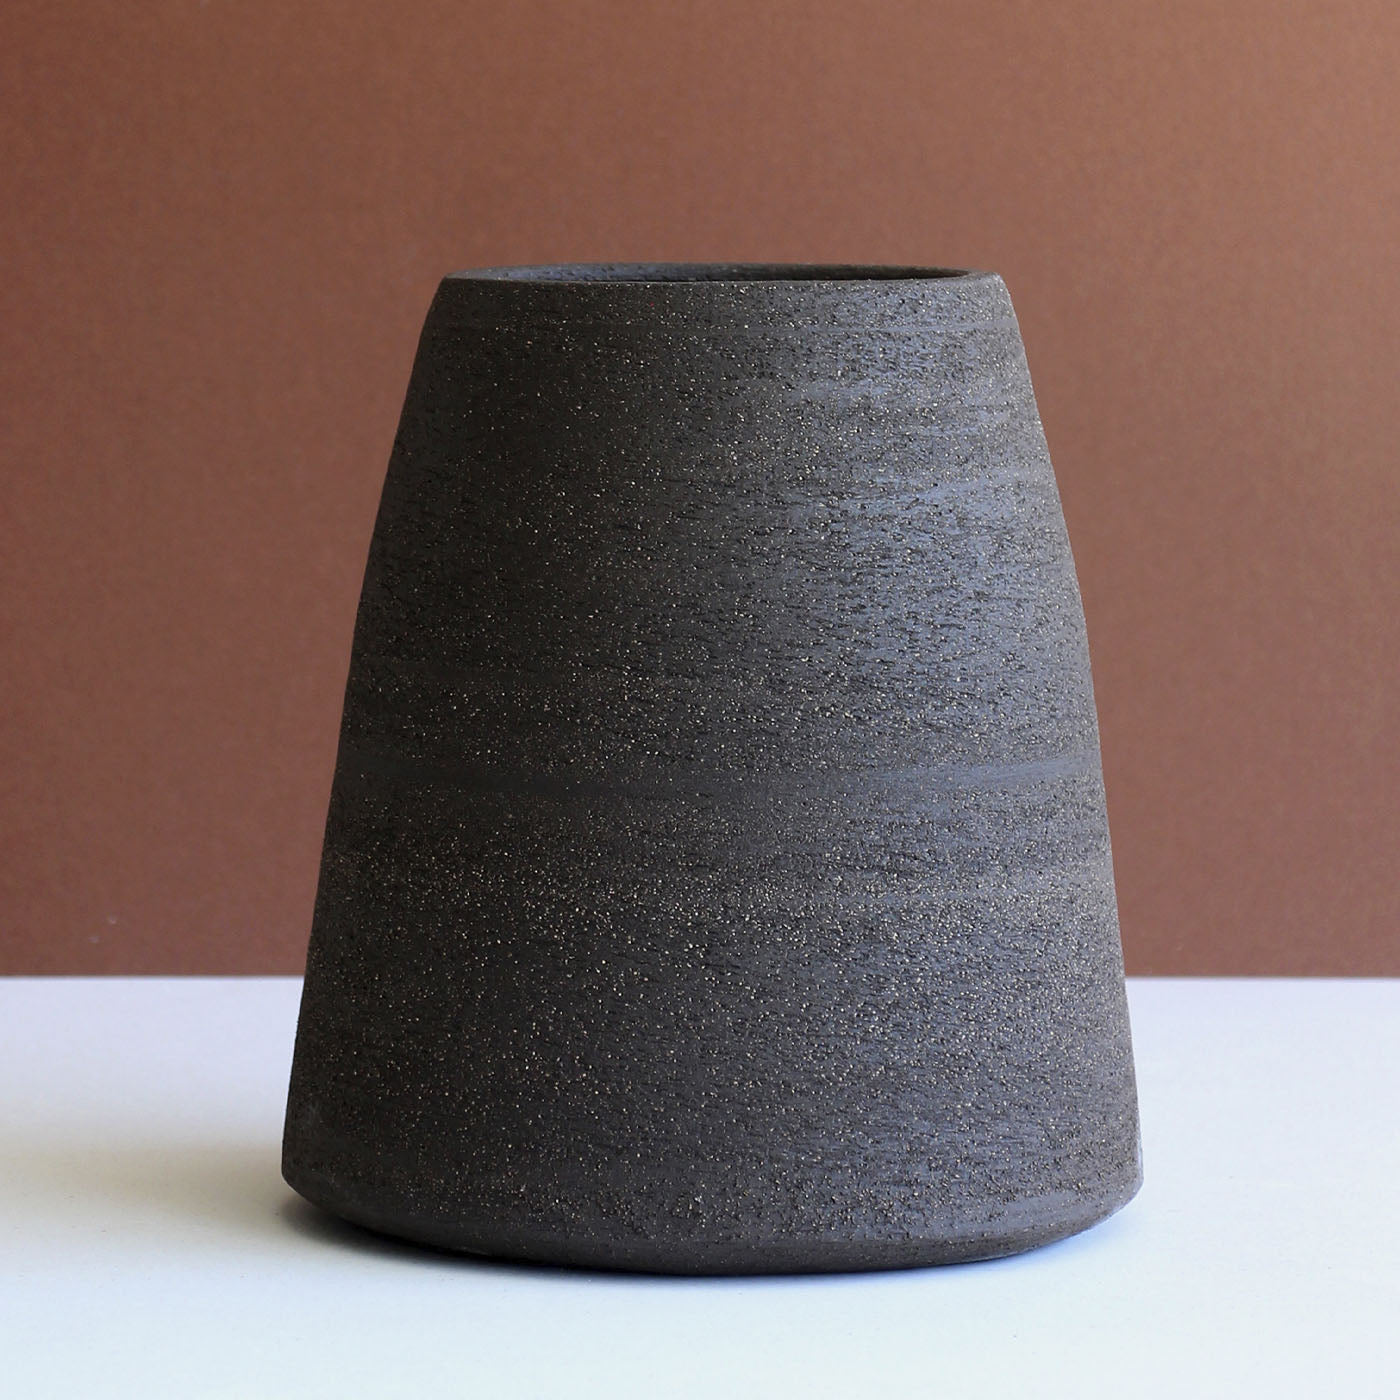 Tapered Carbon-Black Decorative Vase - Alternative view 1